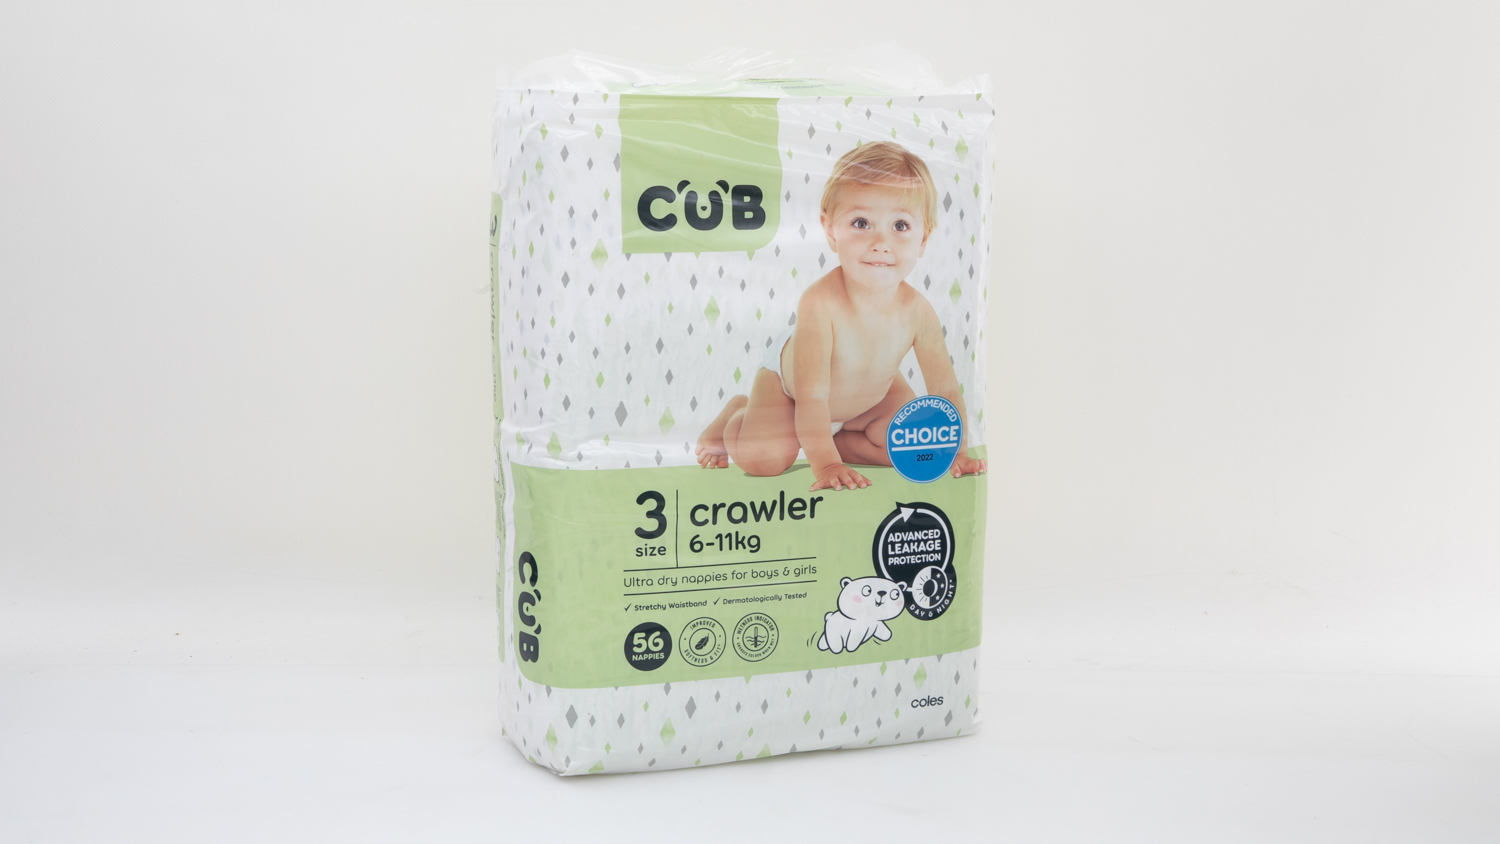 Coles CUB Crawler Size 3 carousel image